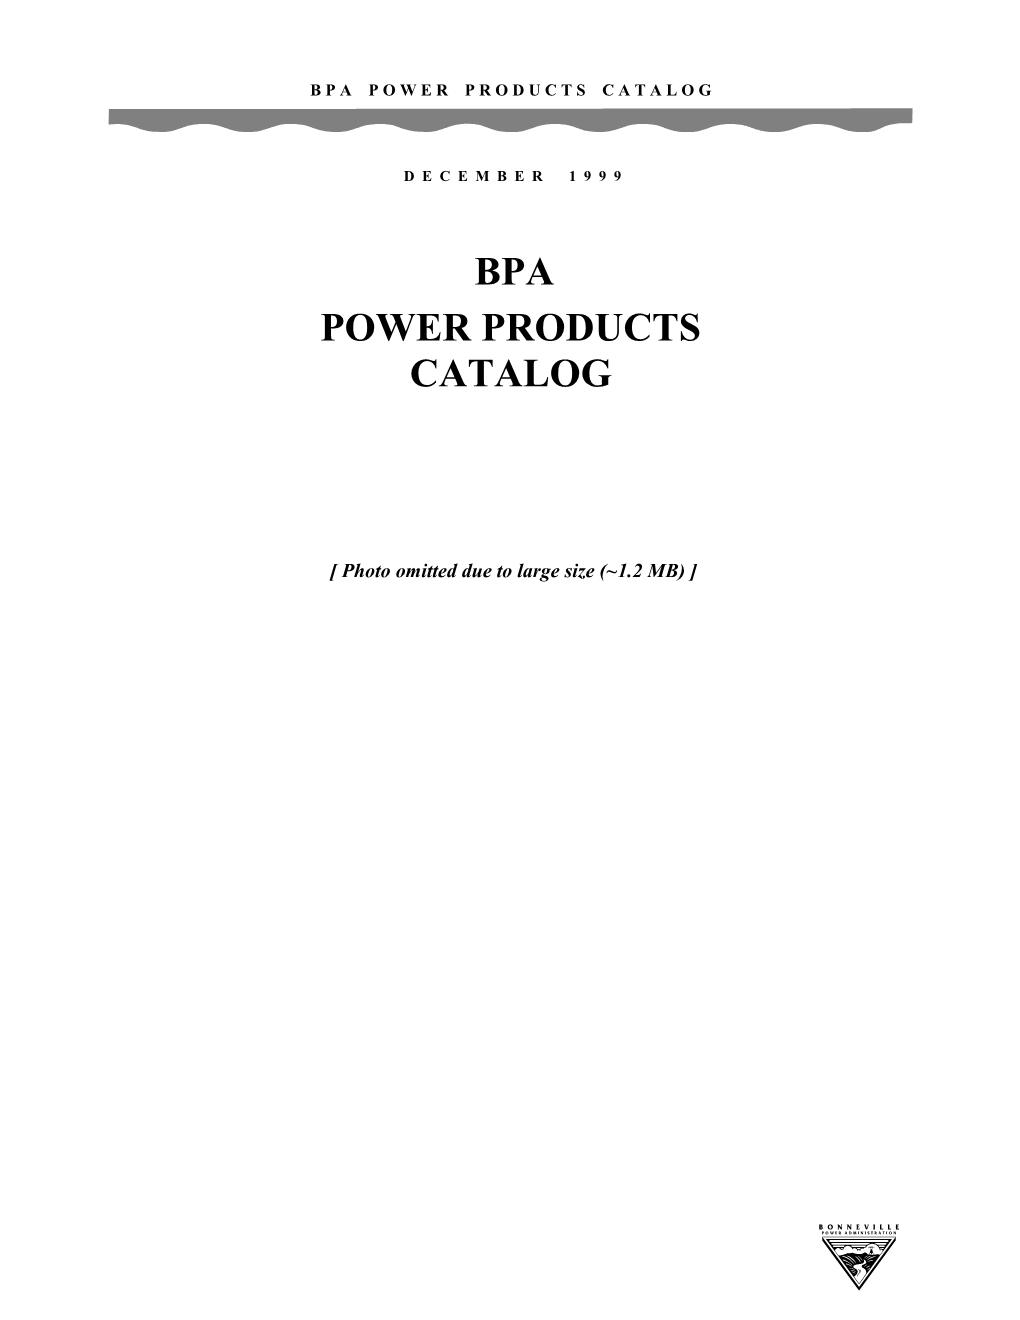 BPA Power Products Catalog